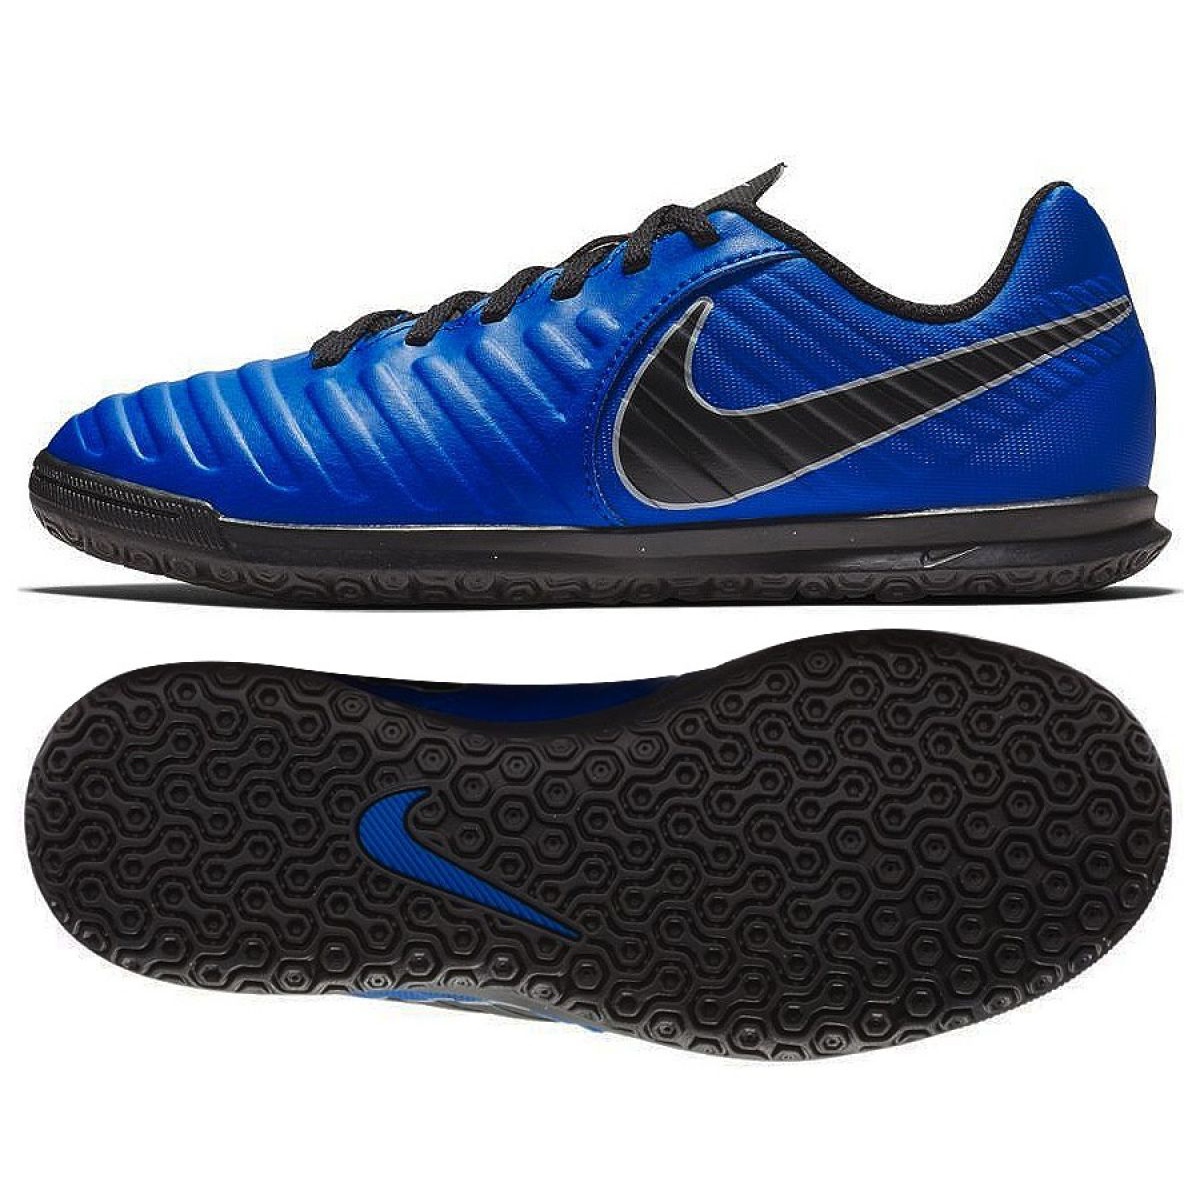 Campo de minas Ciudad limpiar Nike Tiempo Legend 7 Club Ic Jr AH7260 400 football shoes blue navy blue -  KeeShoes